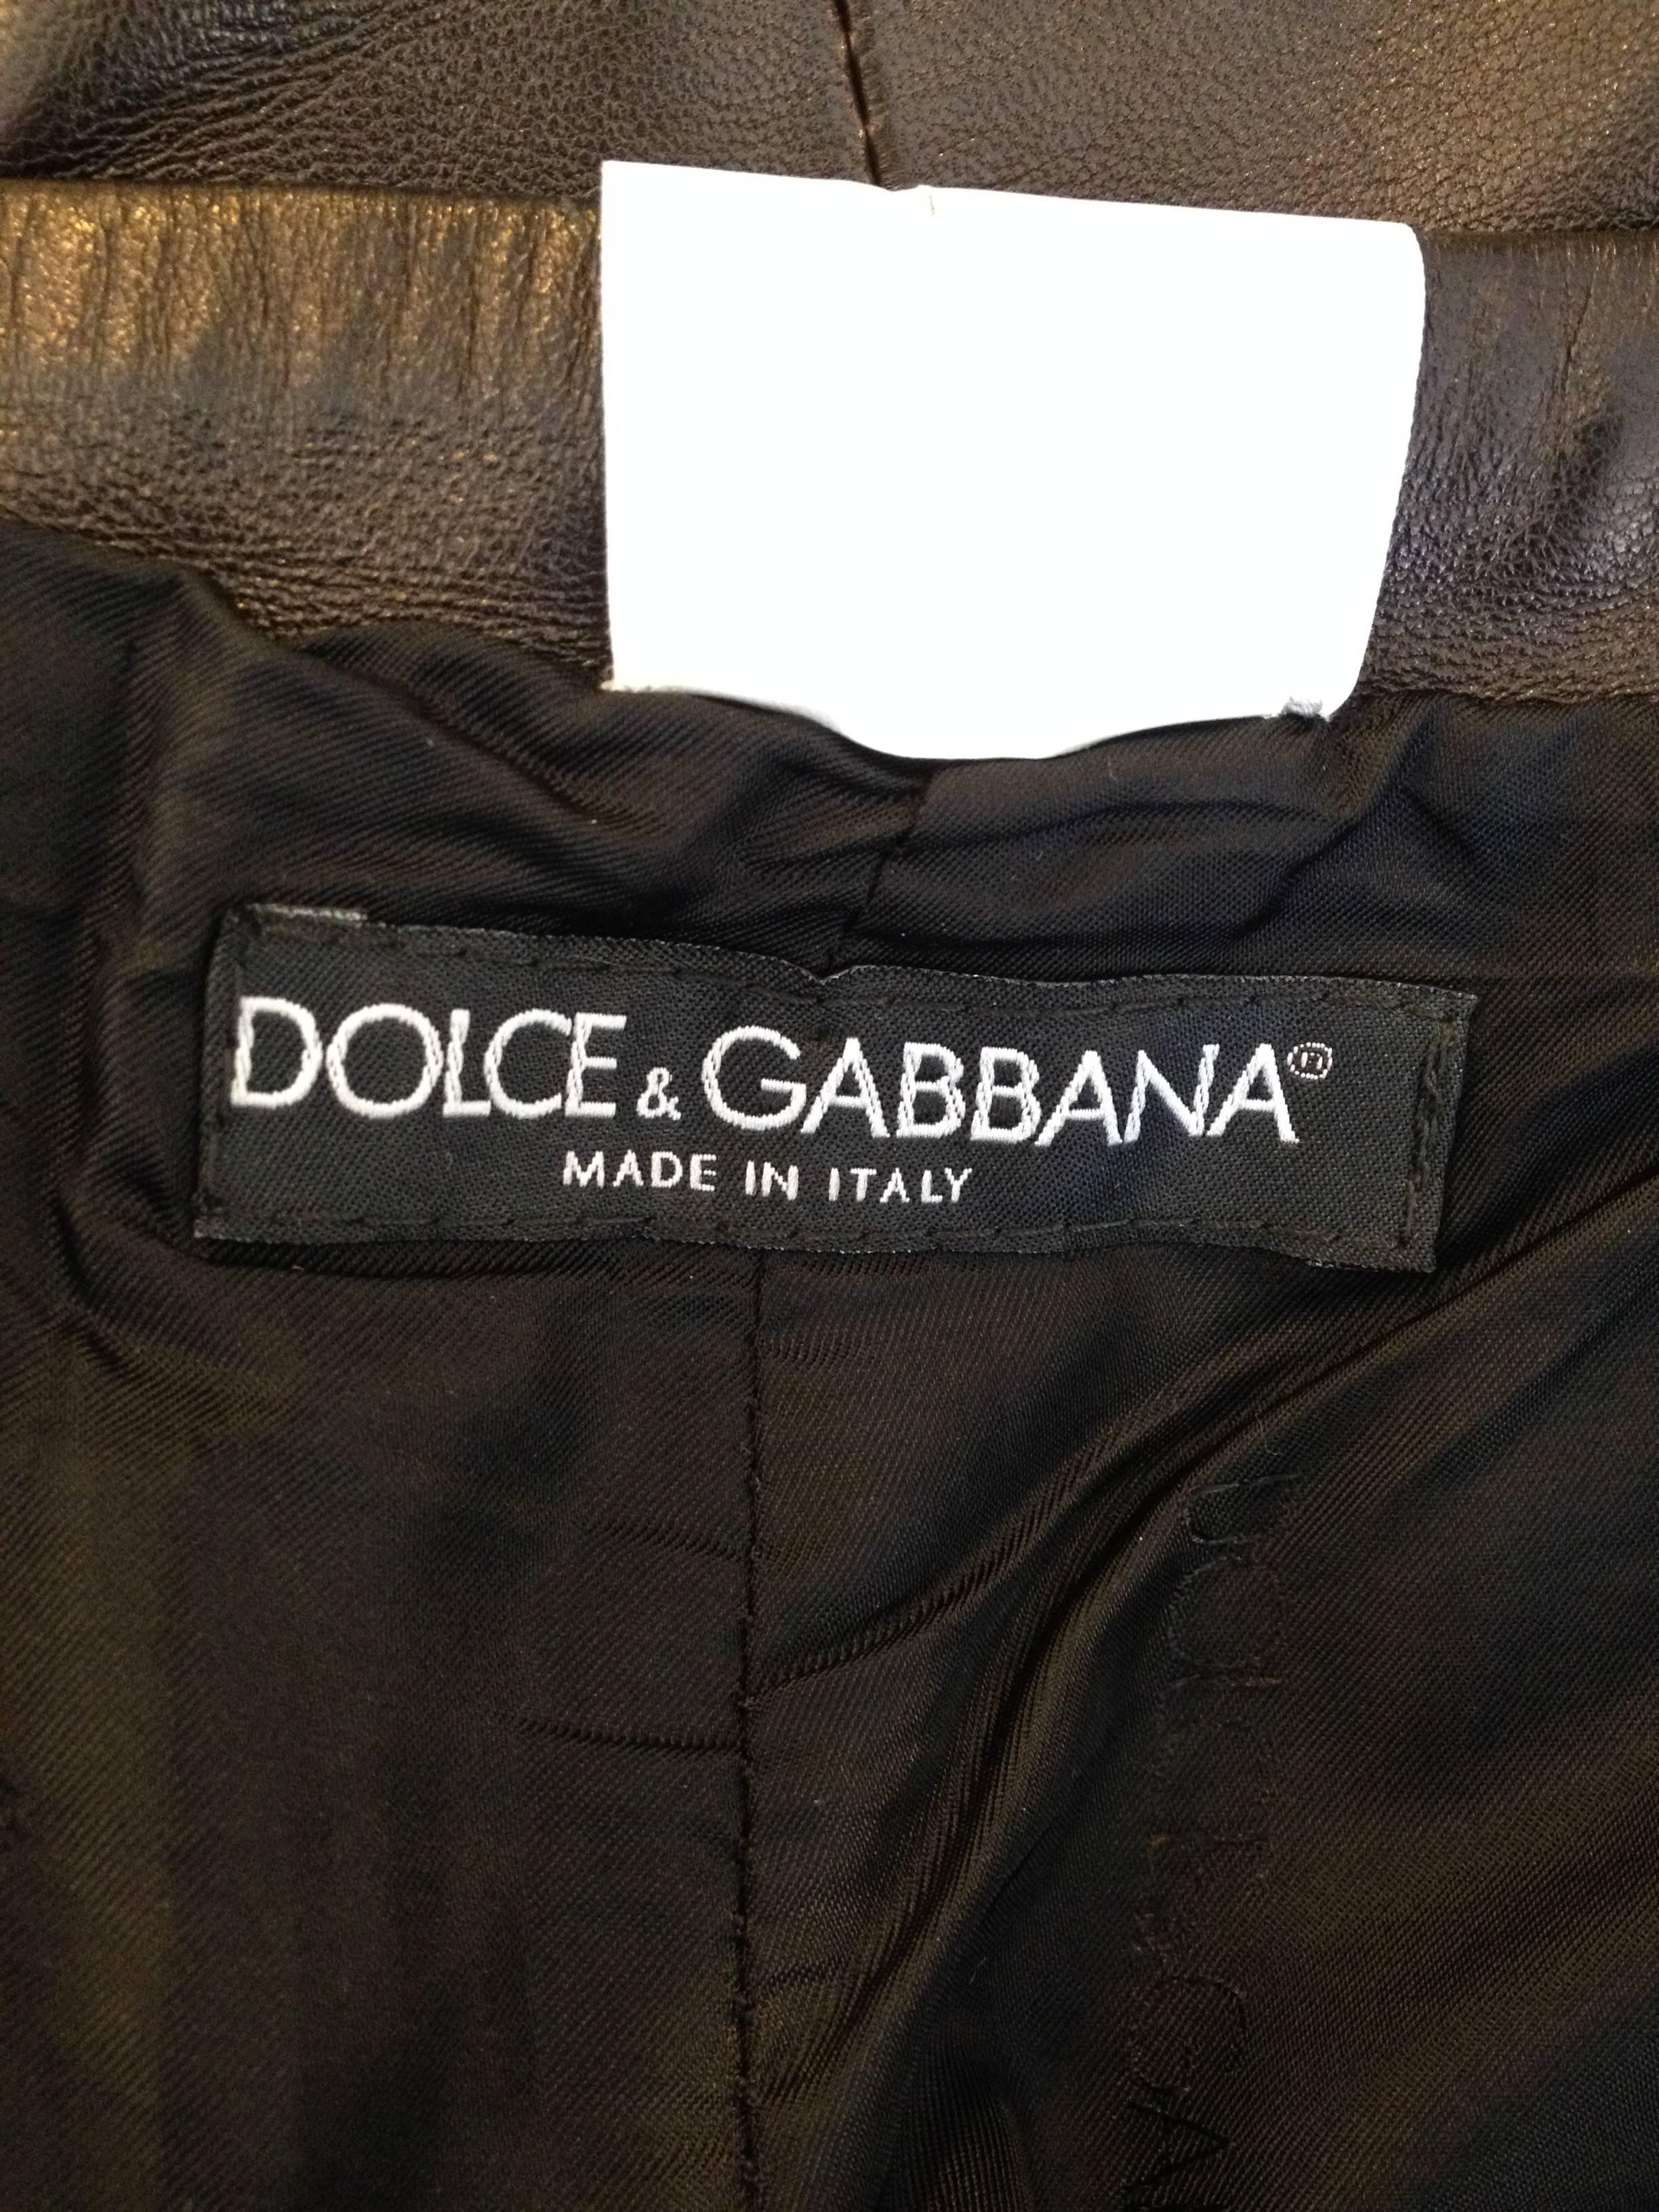 Dolce & Gabbana Black Leather Pants 6